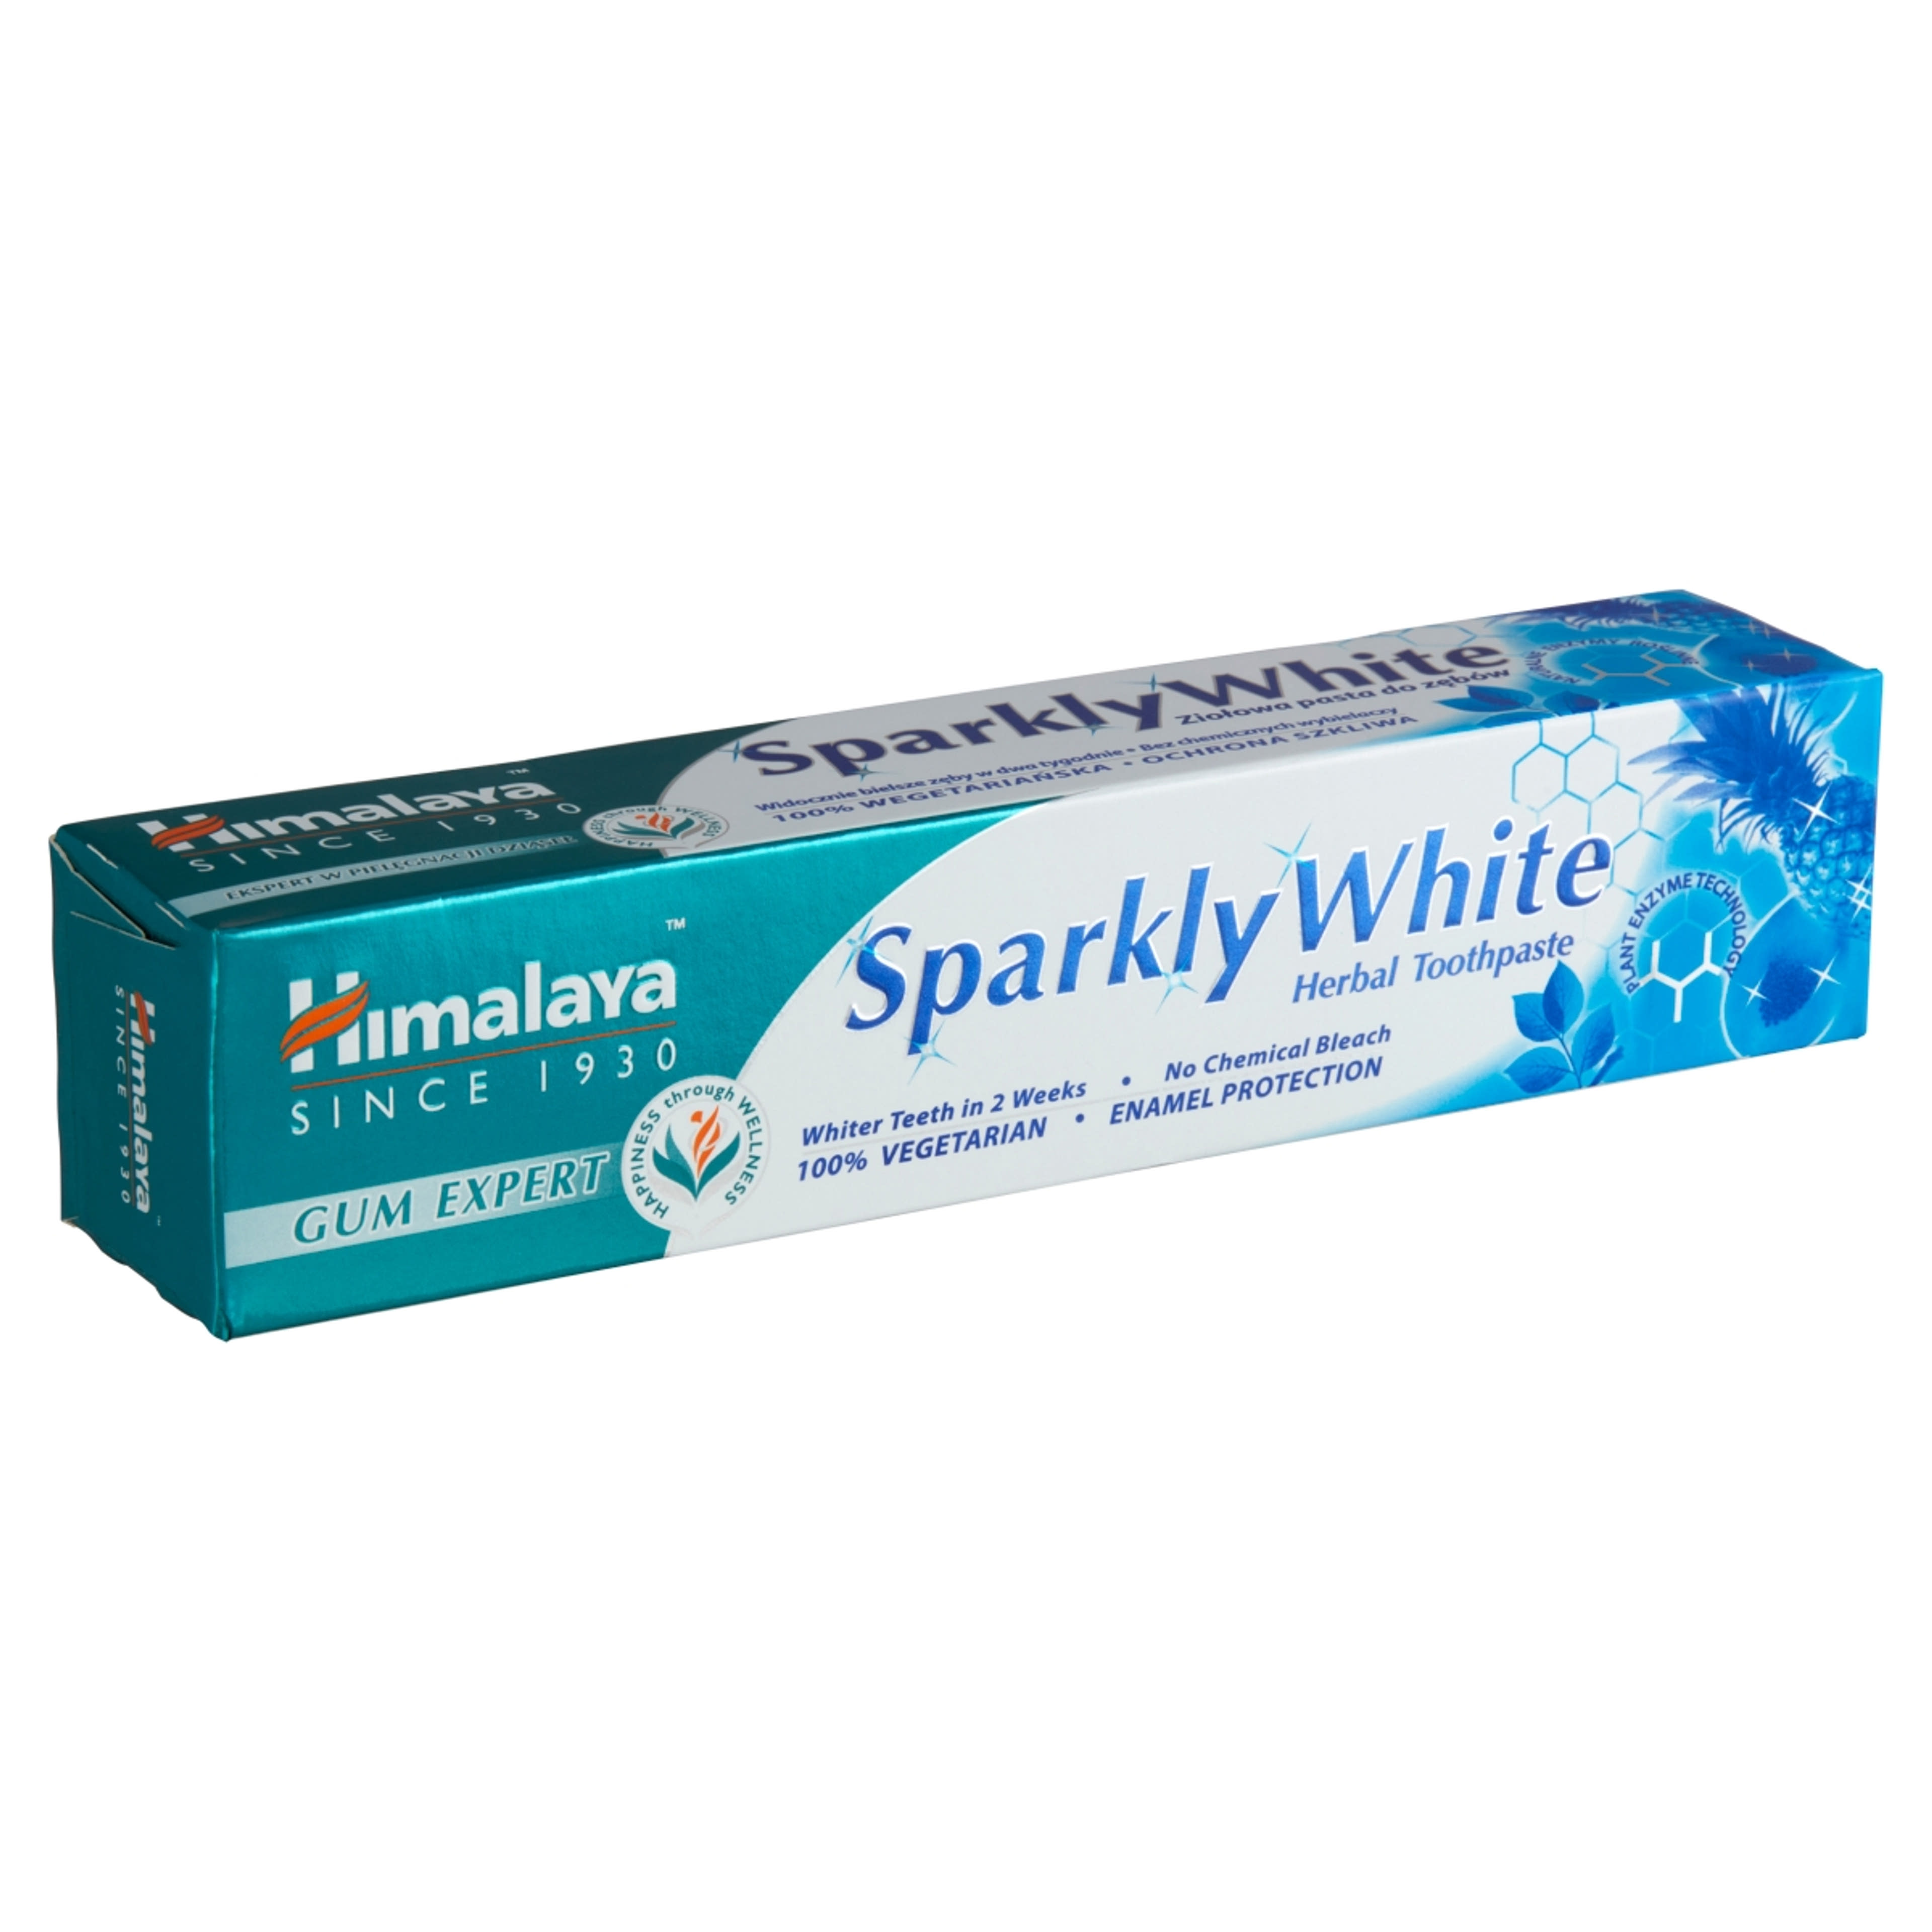 Himalaya Gum Expert Sparkly White fogkrém - 75 ml-3